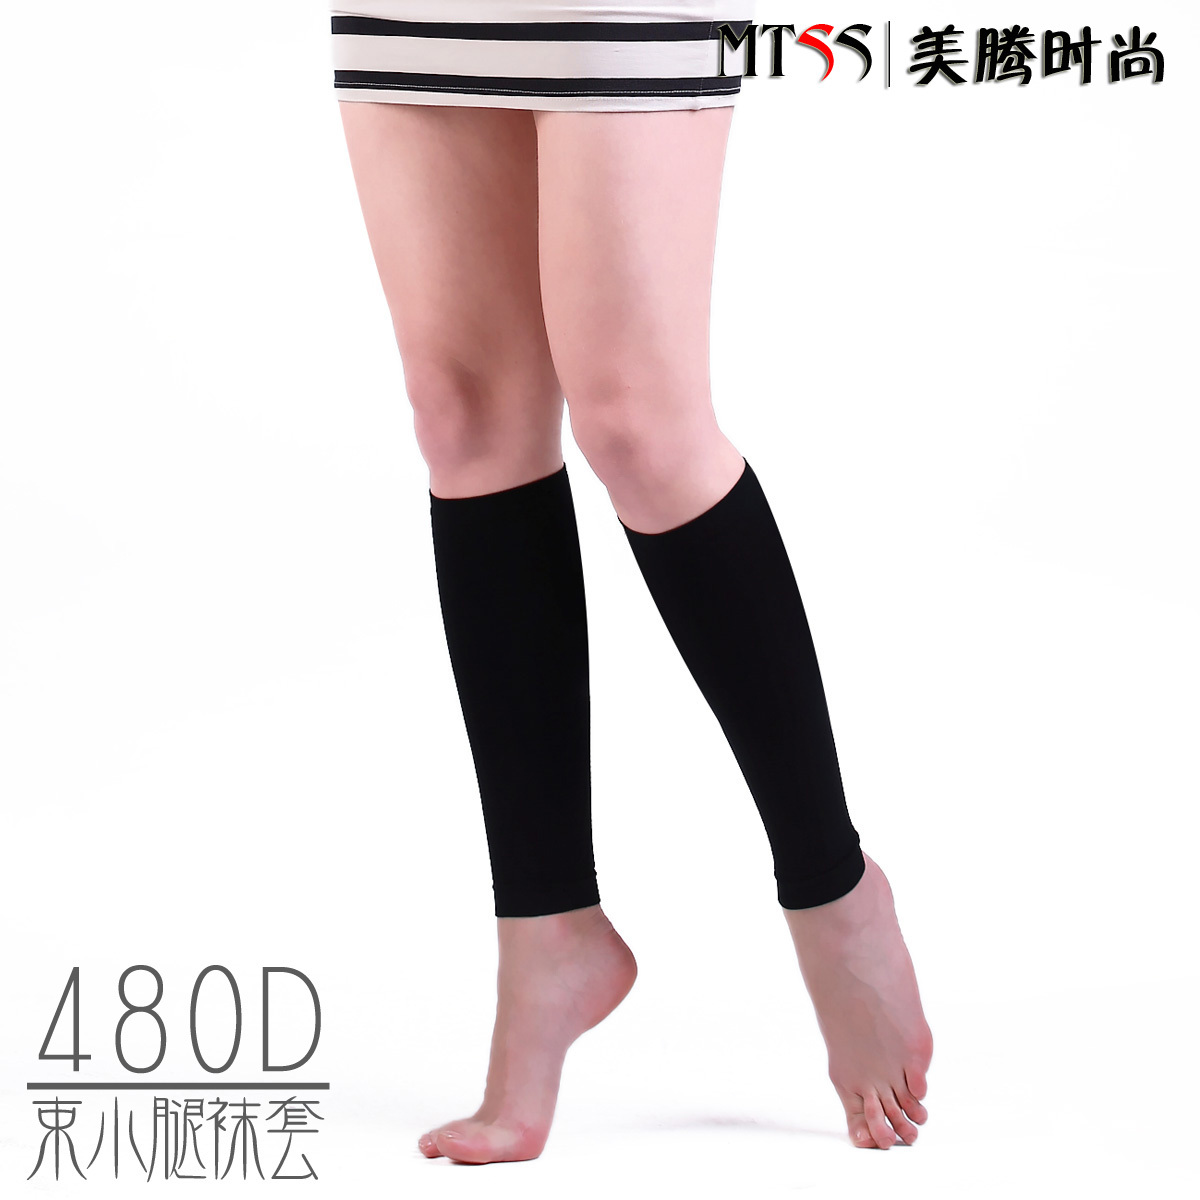 Lower leg ankle sock 480d pressure socks cuish leg fat burning rousseaus free shipping